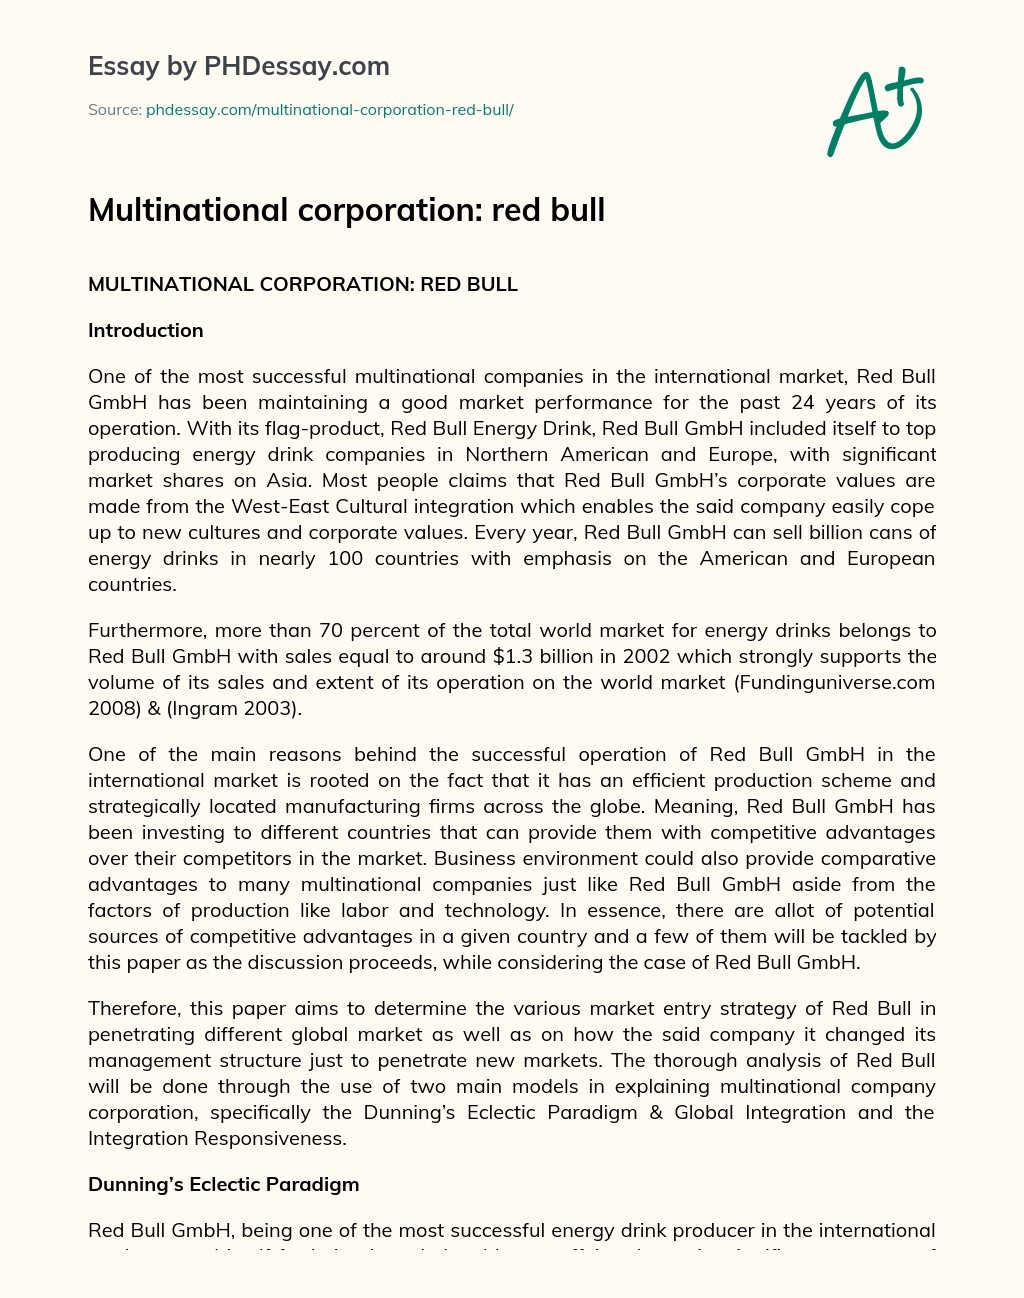 Multinational corporation: red bull essay